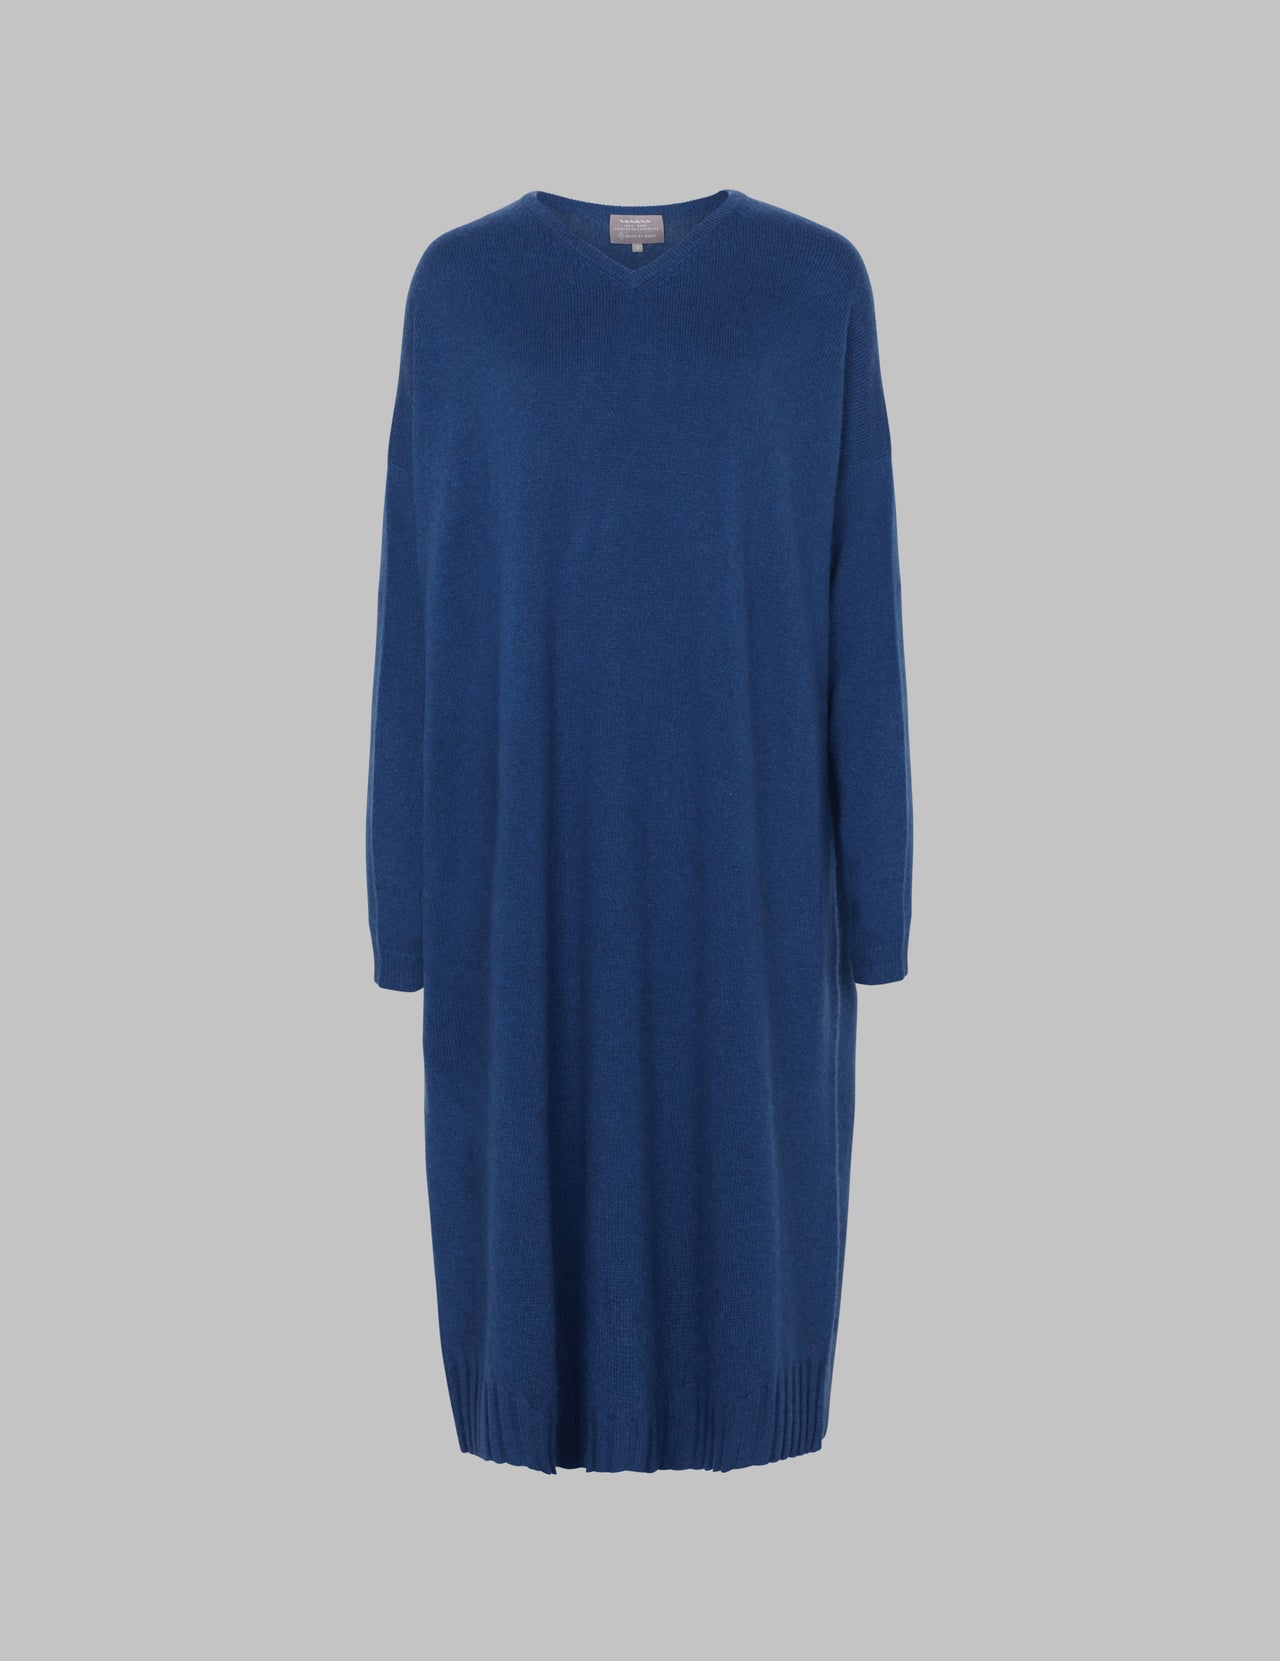  Prussian Blue V Neck Cashmere Dress 